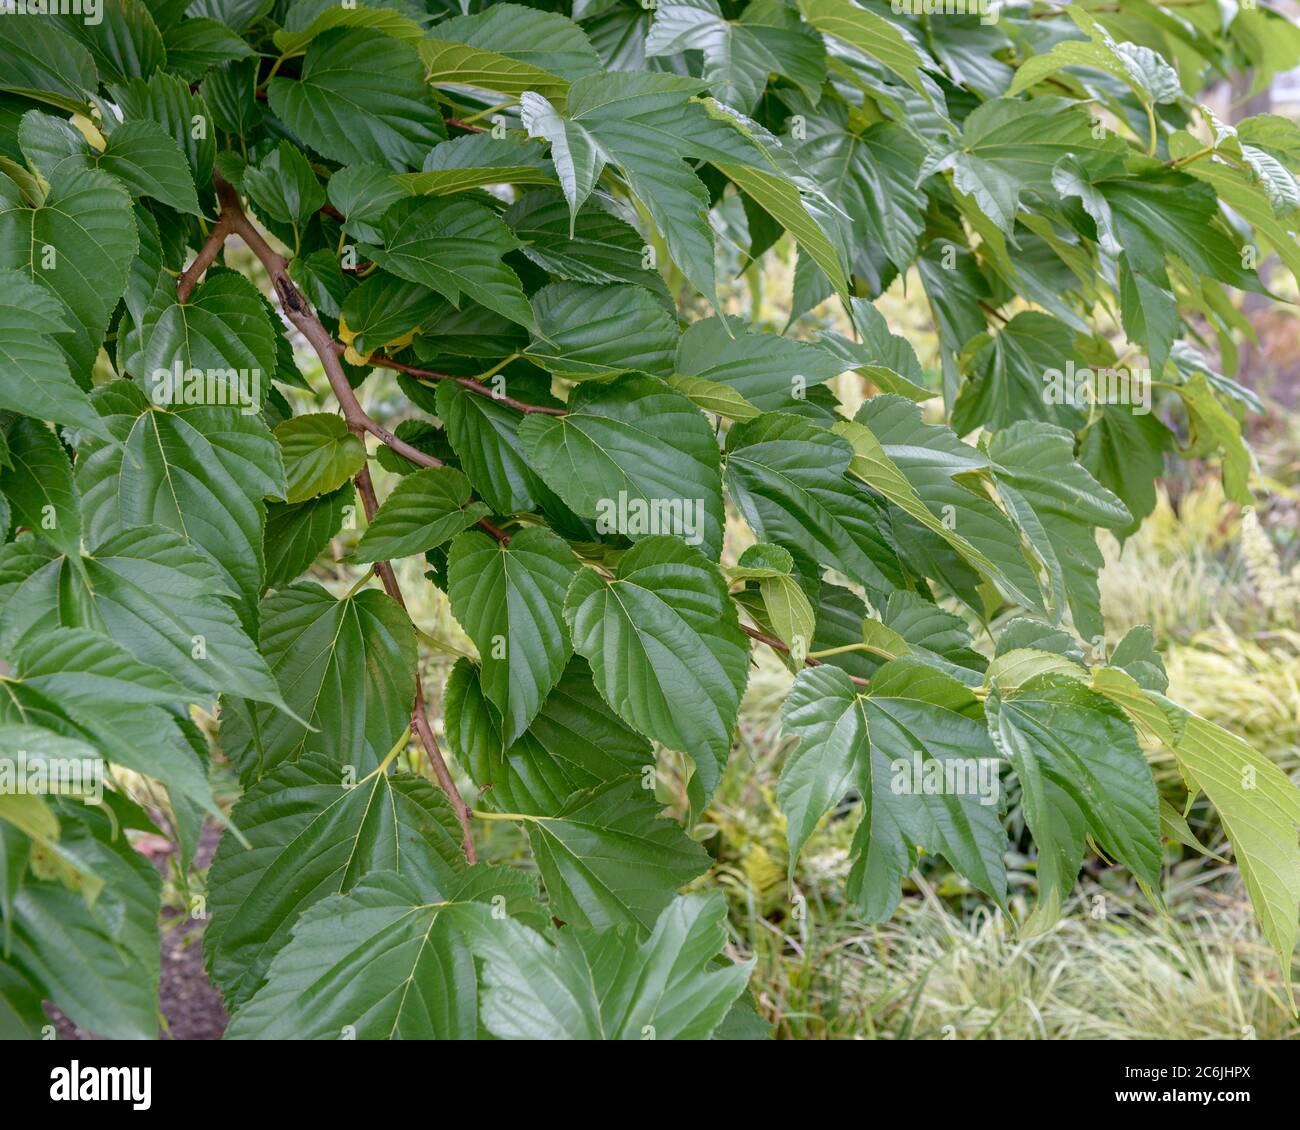 Grossblaettrige Maulbeere Morus alba macrophylla, Moreton Bay Mulberry Morus alba macrophylla Foto Stock